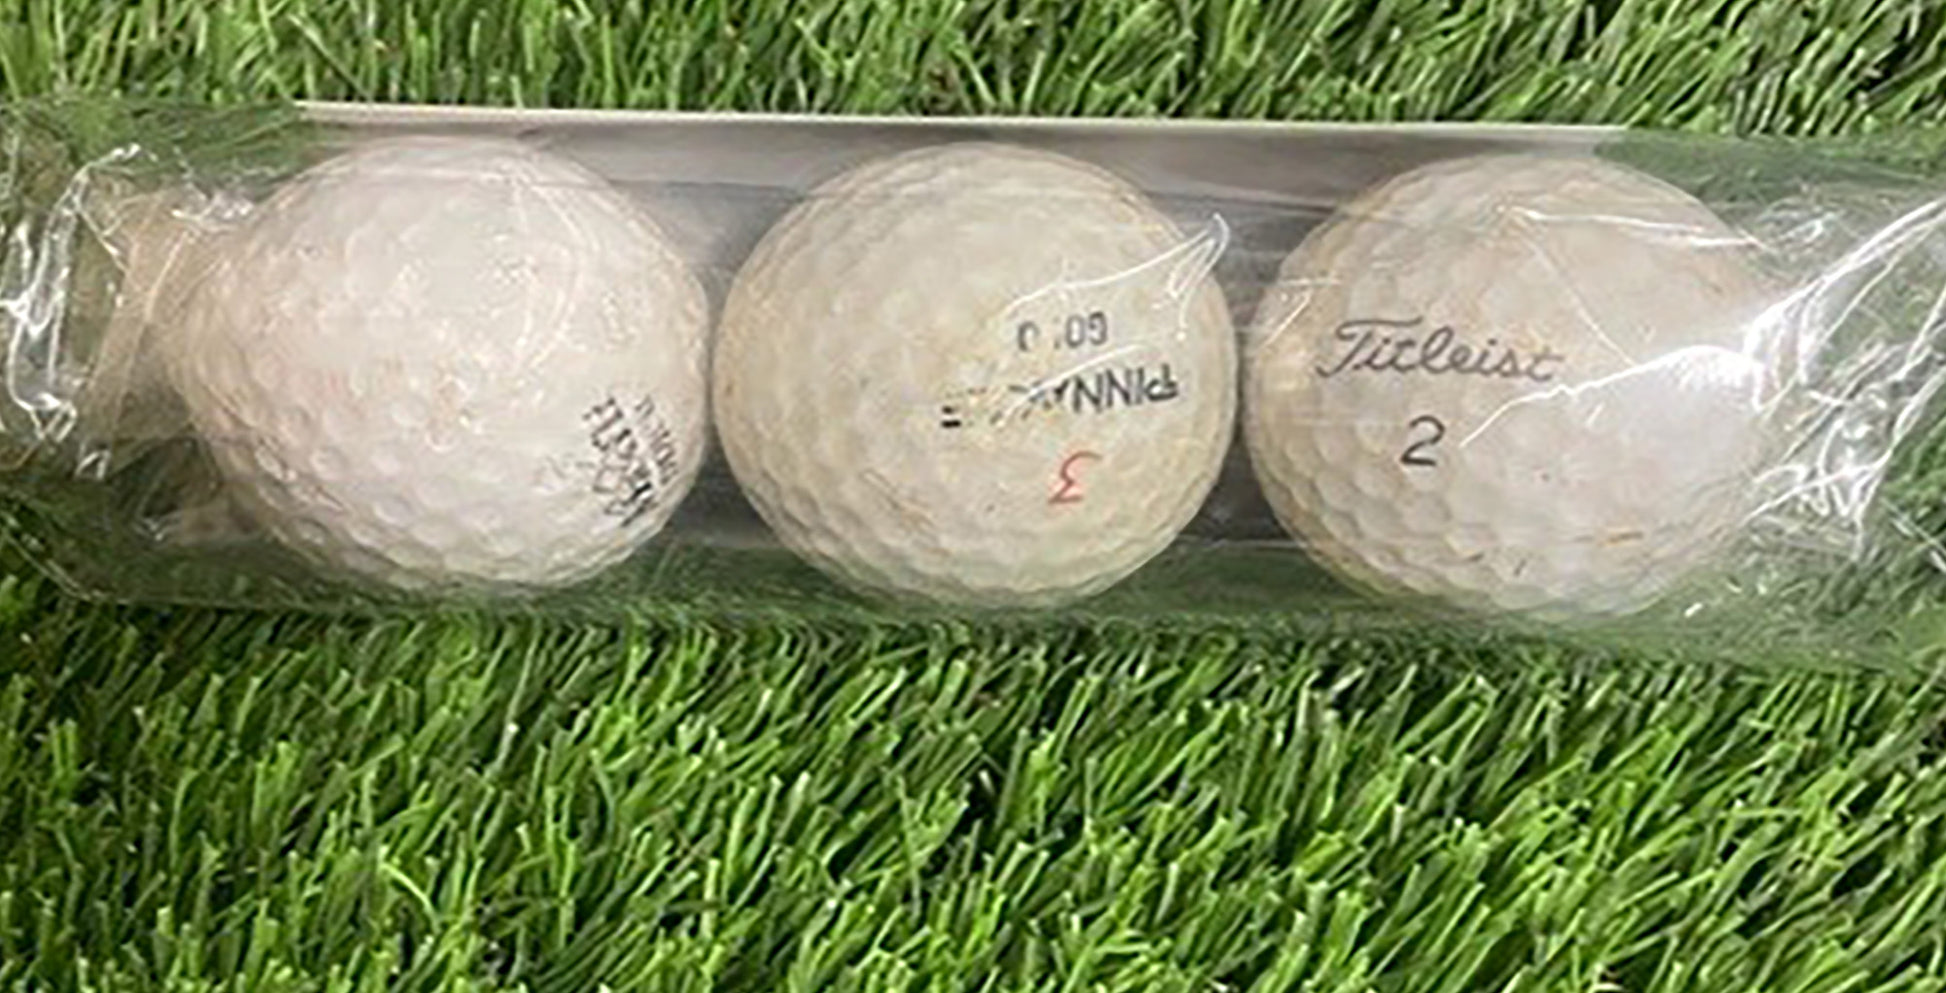 Funny Golf Balls Used Golf Balls